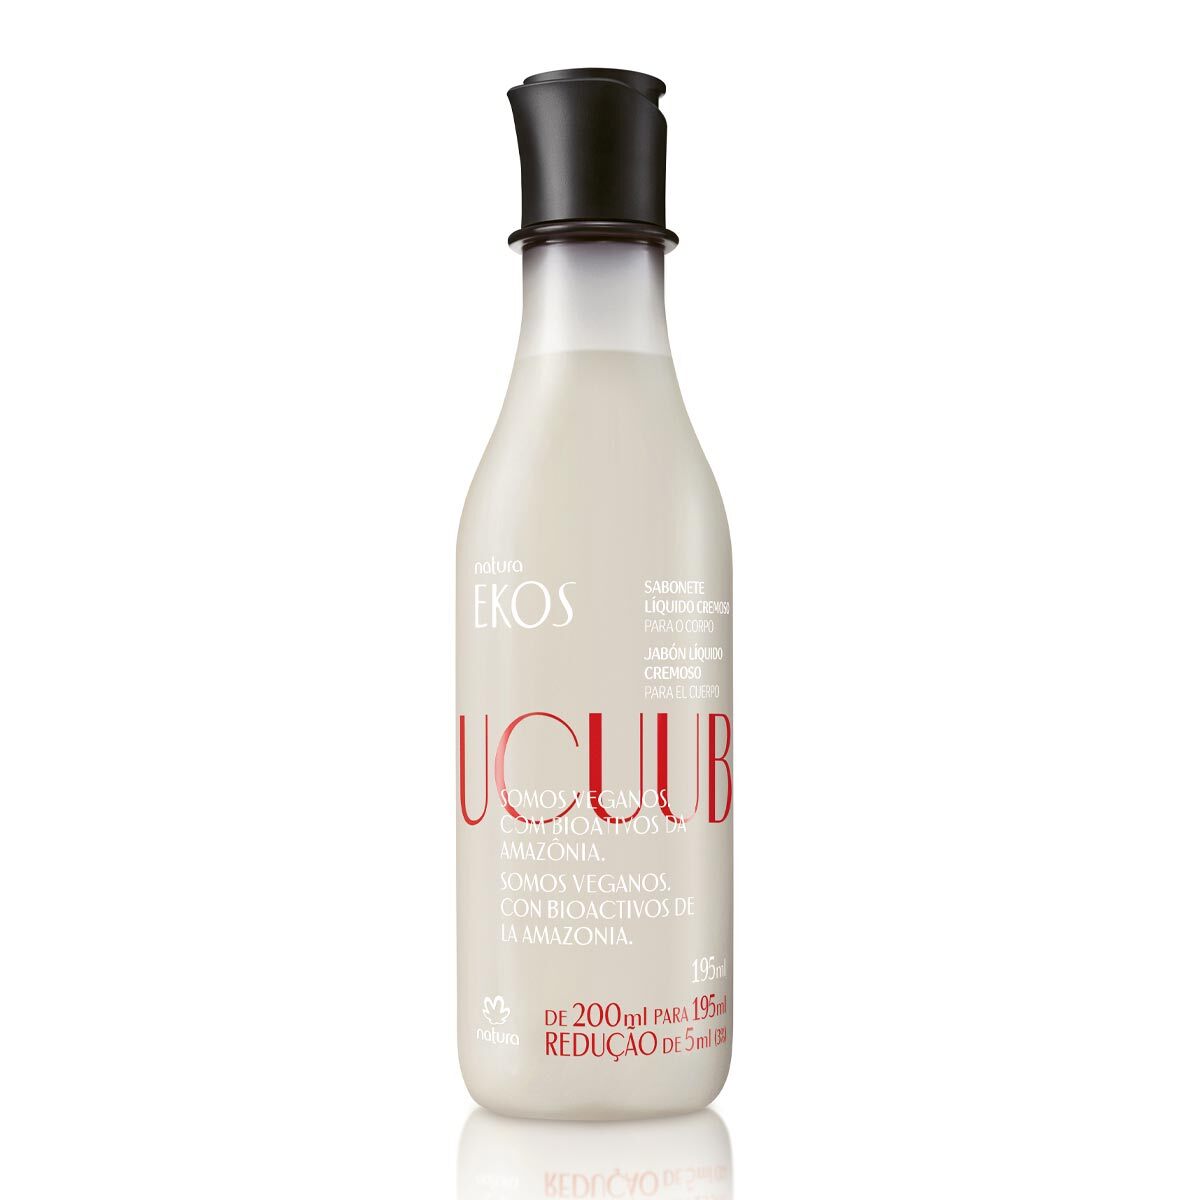 Ekos Ucuuba Liquid Body Soap 195ml